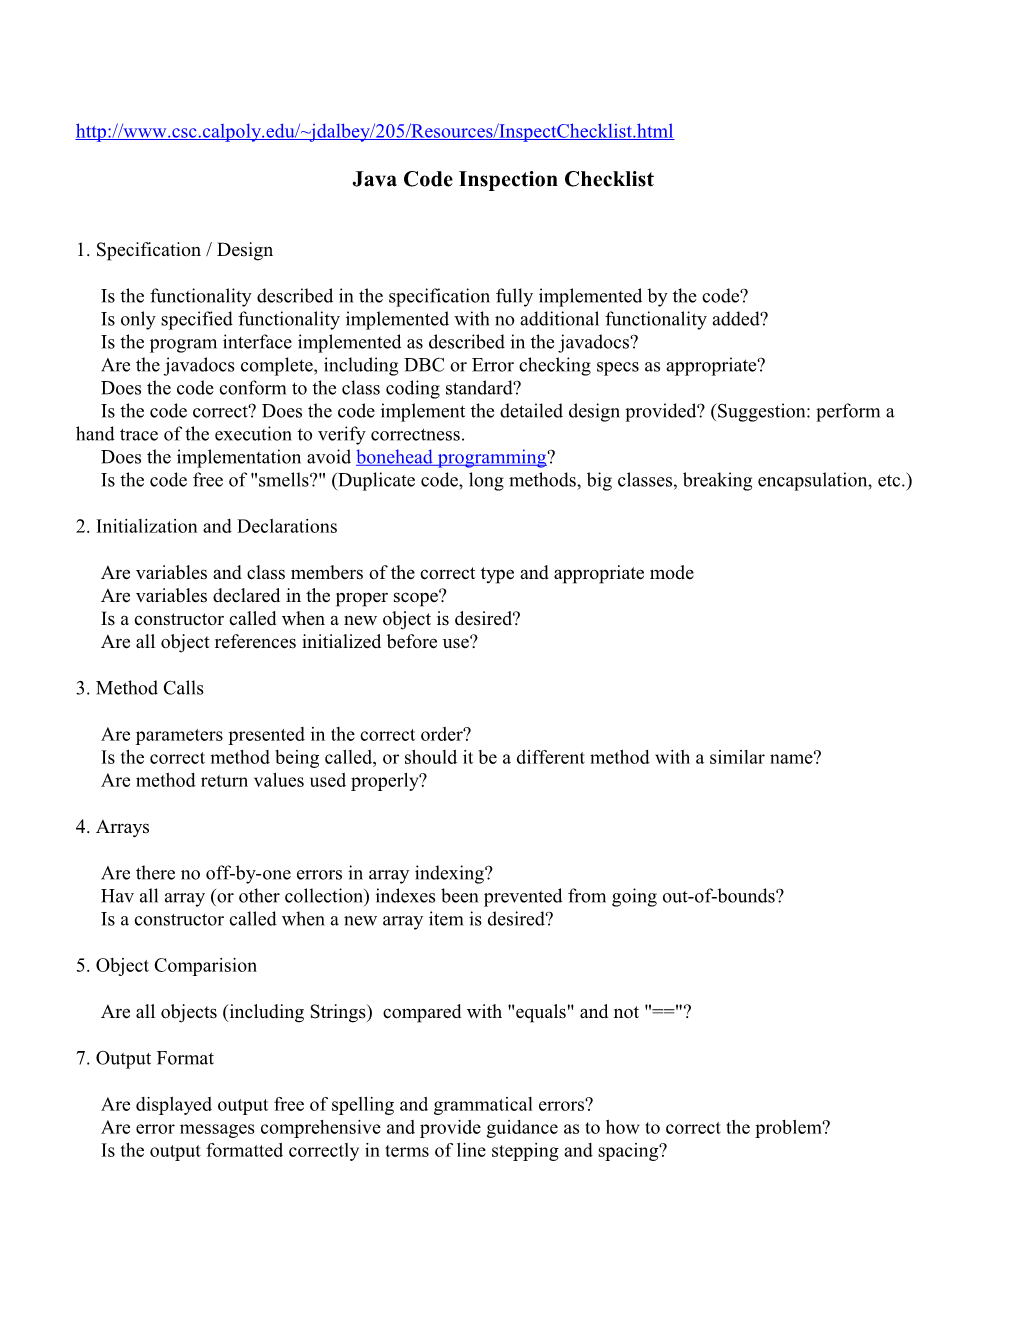 Java Code Inspection Checklist